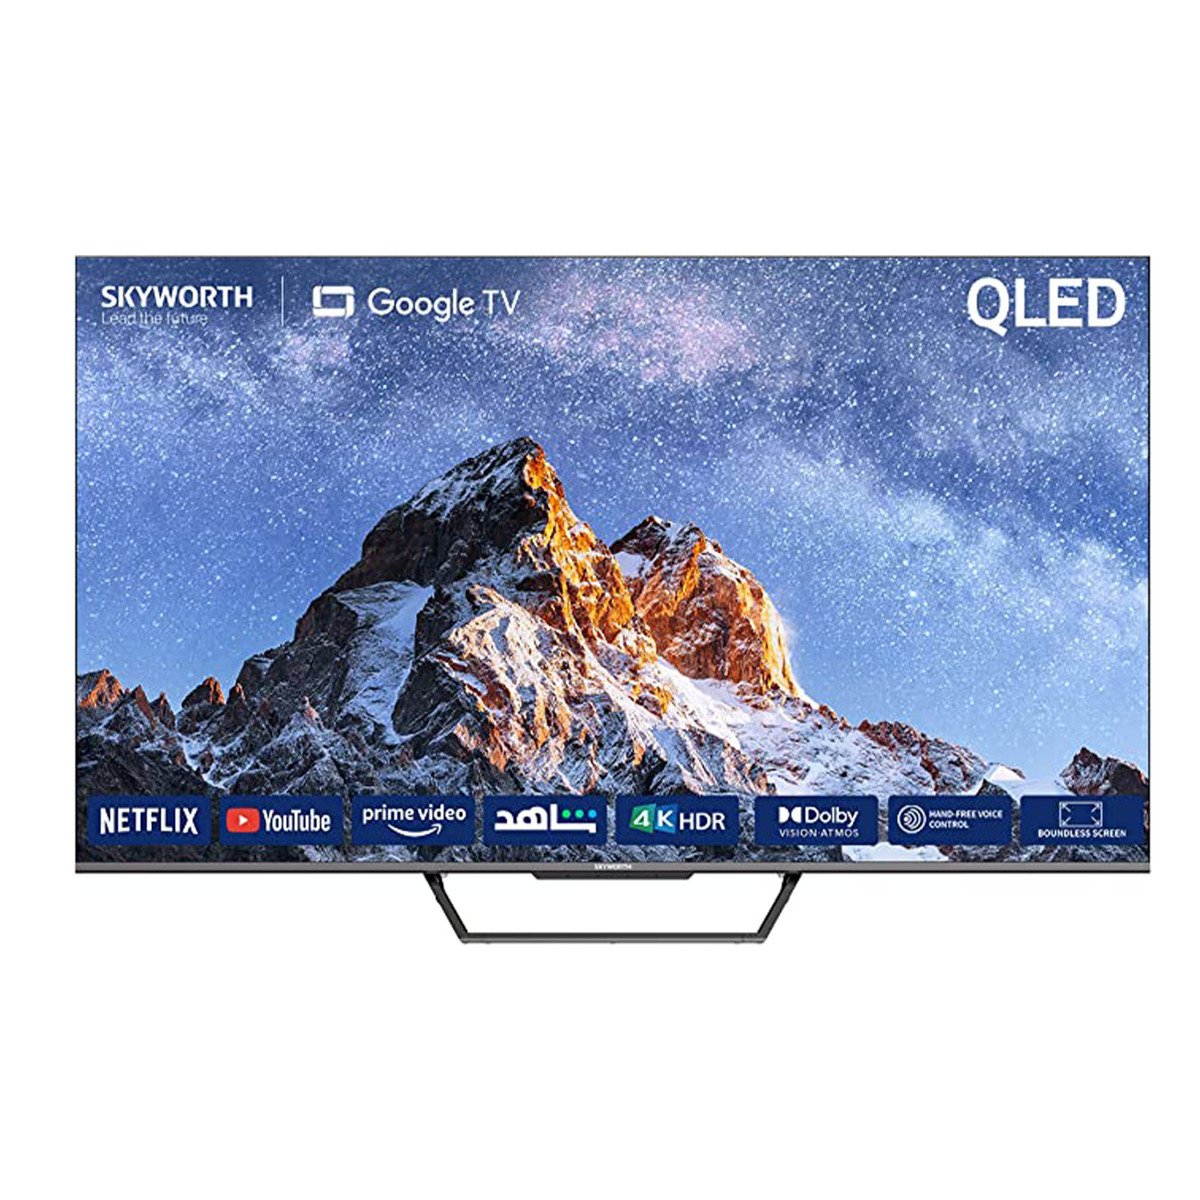 Skyworth QLED Google TV 4K UHD Dolby Vision HDR10+ 65SUE9500 65inch